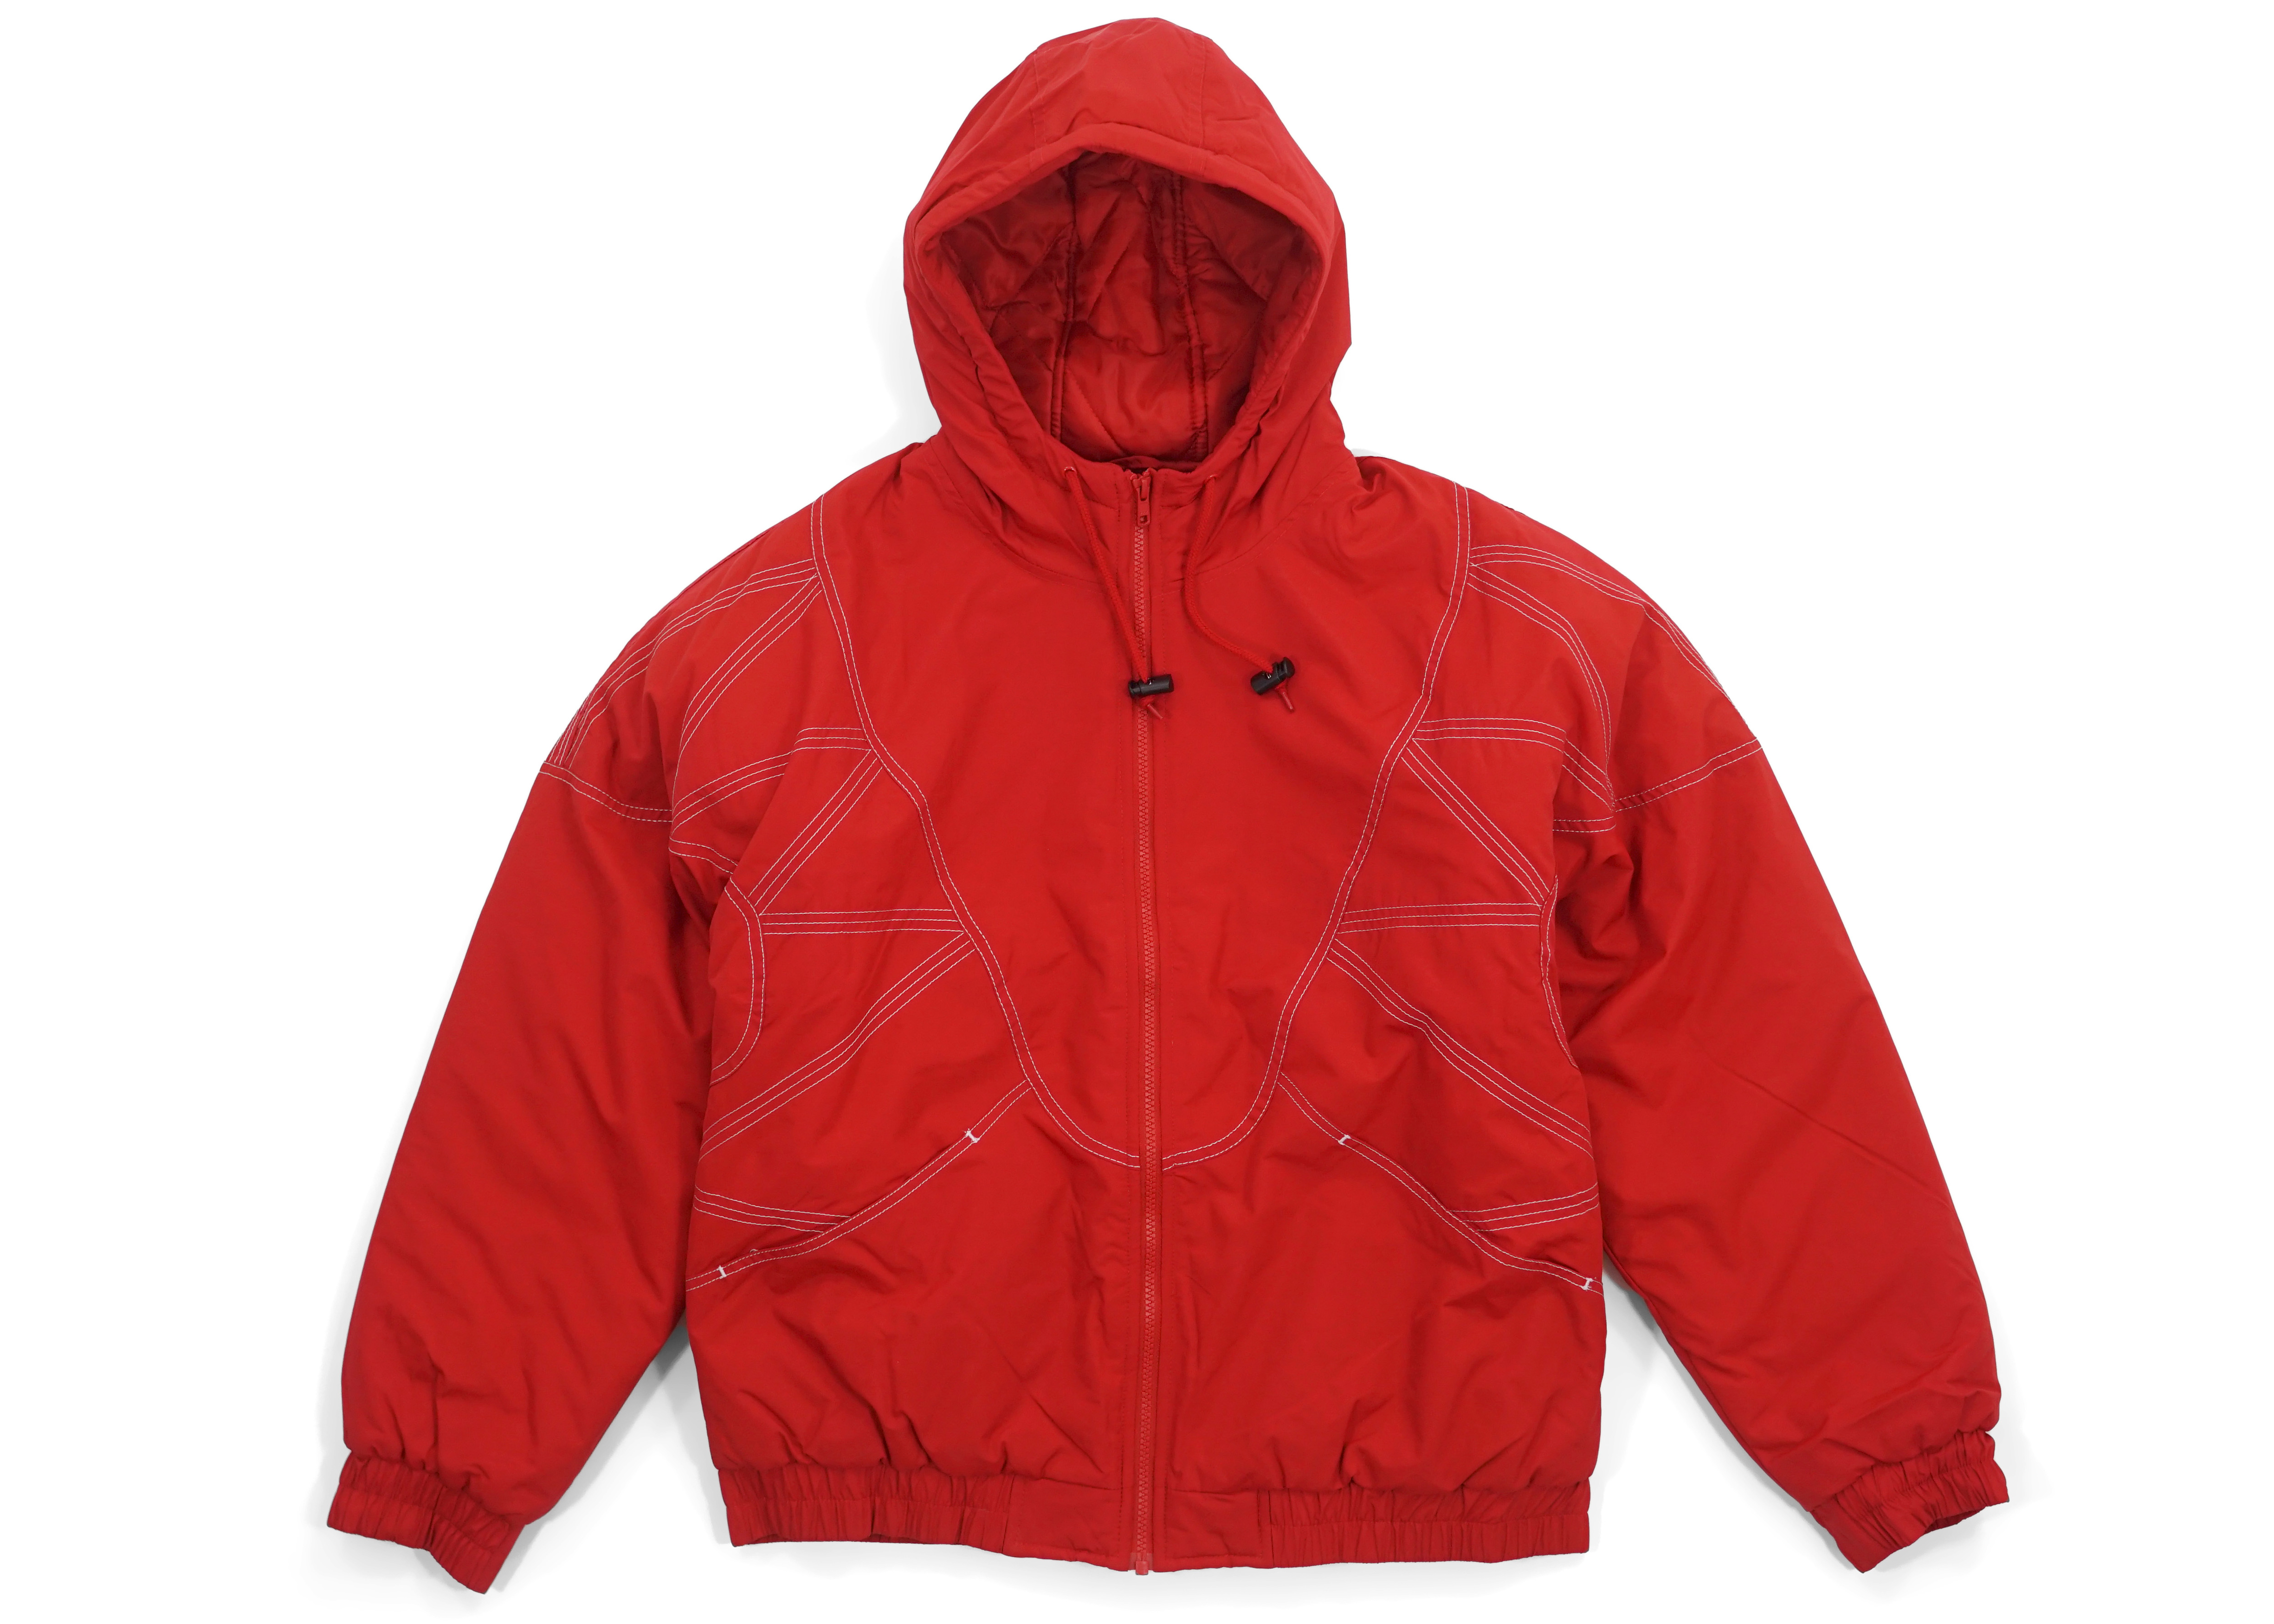 Supreme Zig Zag Stitch Puffy Jacket Red